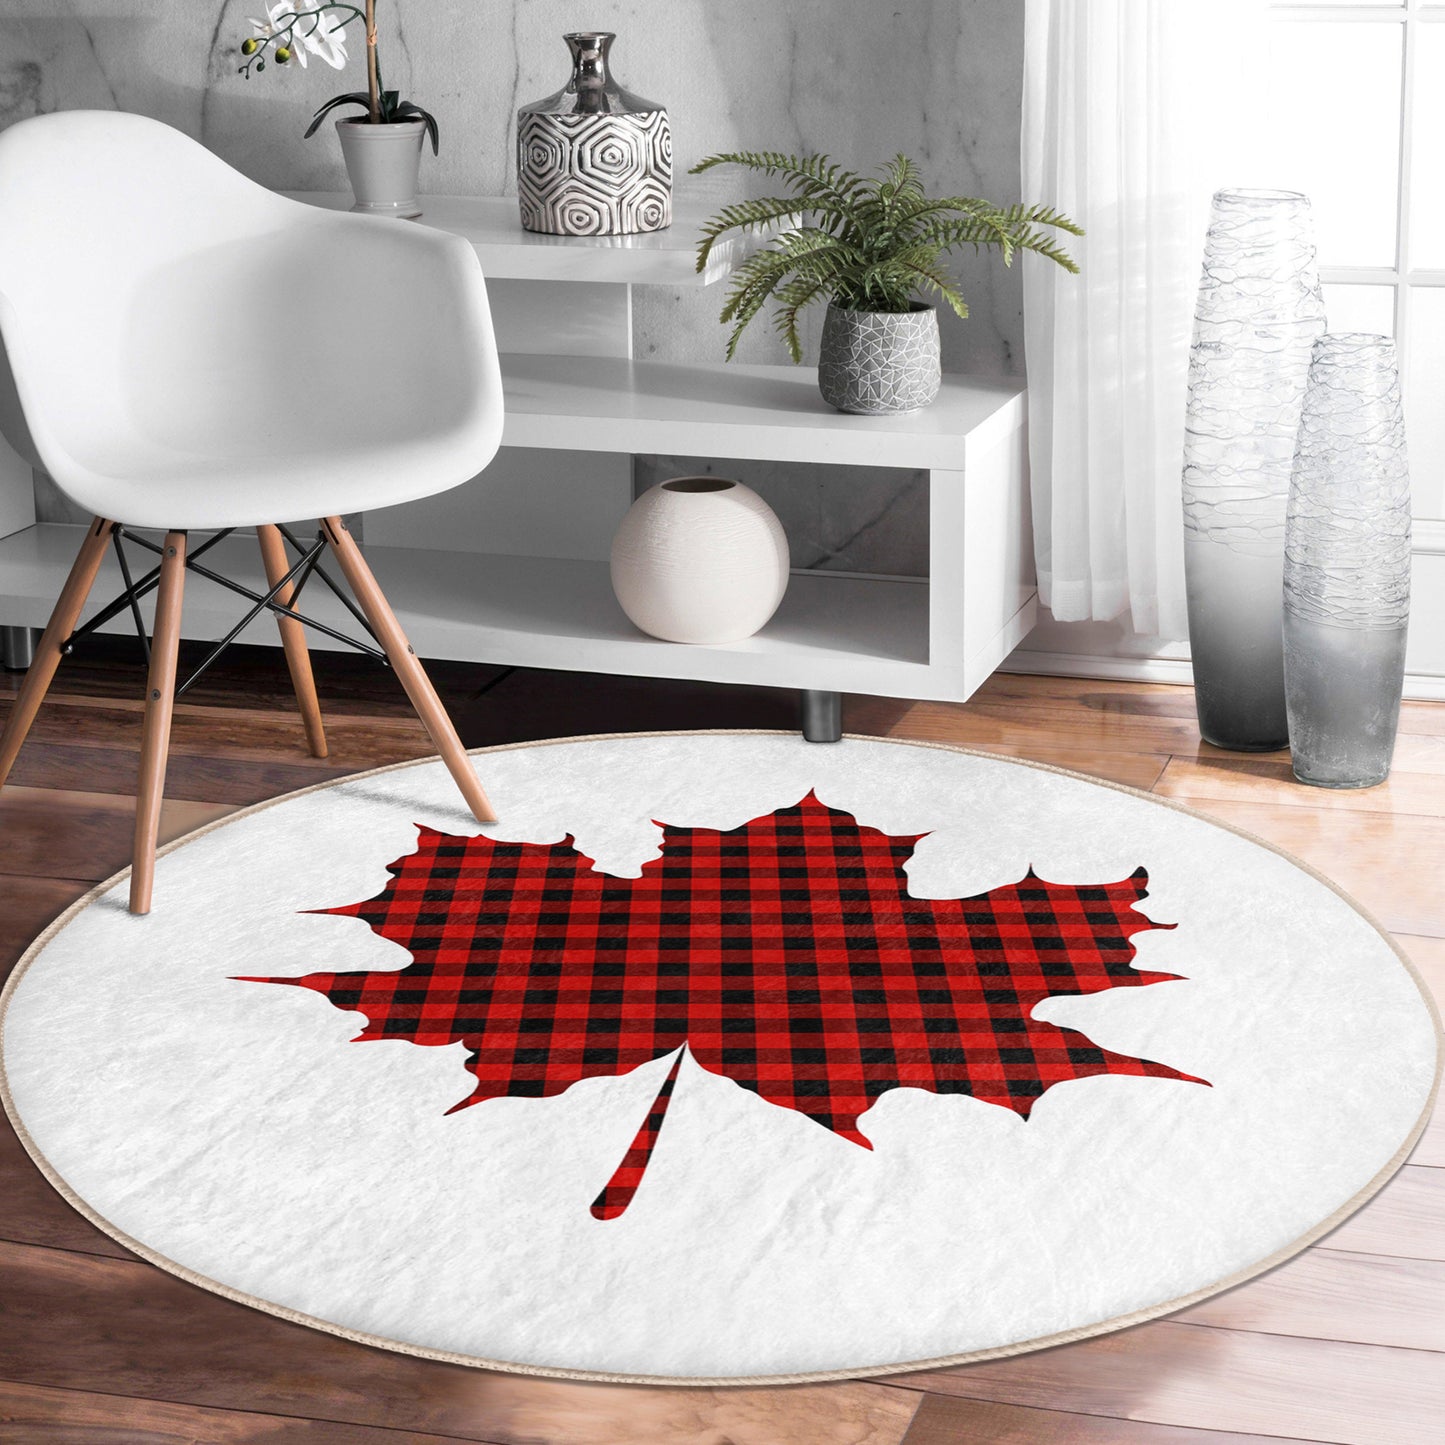 Artistic Canadian Maple Leaf Design Decorative Rug - True North Pride